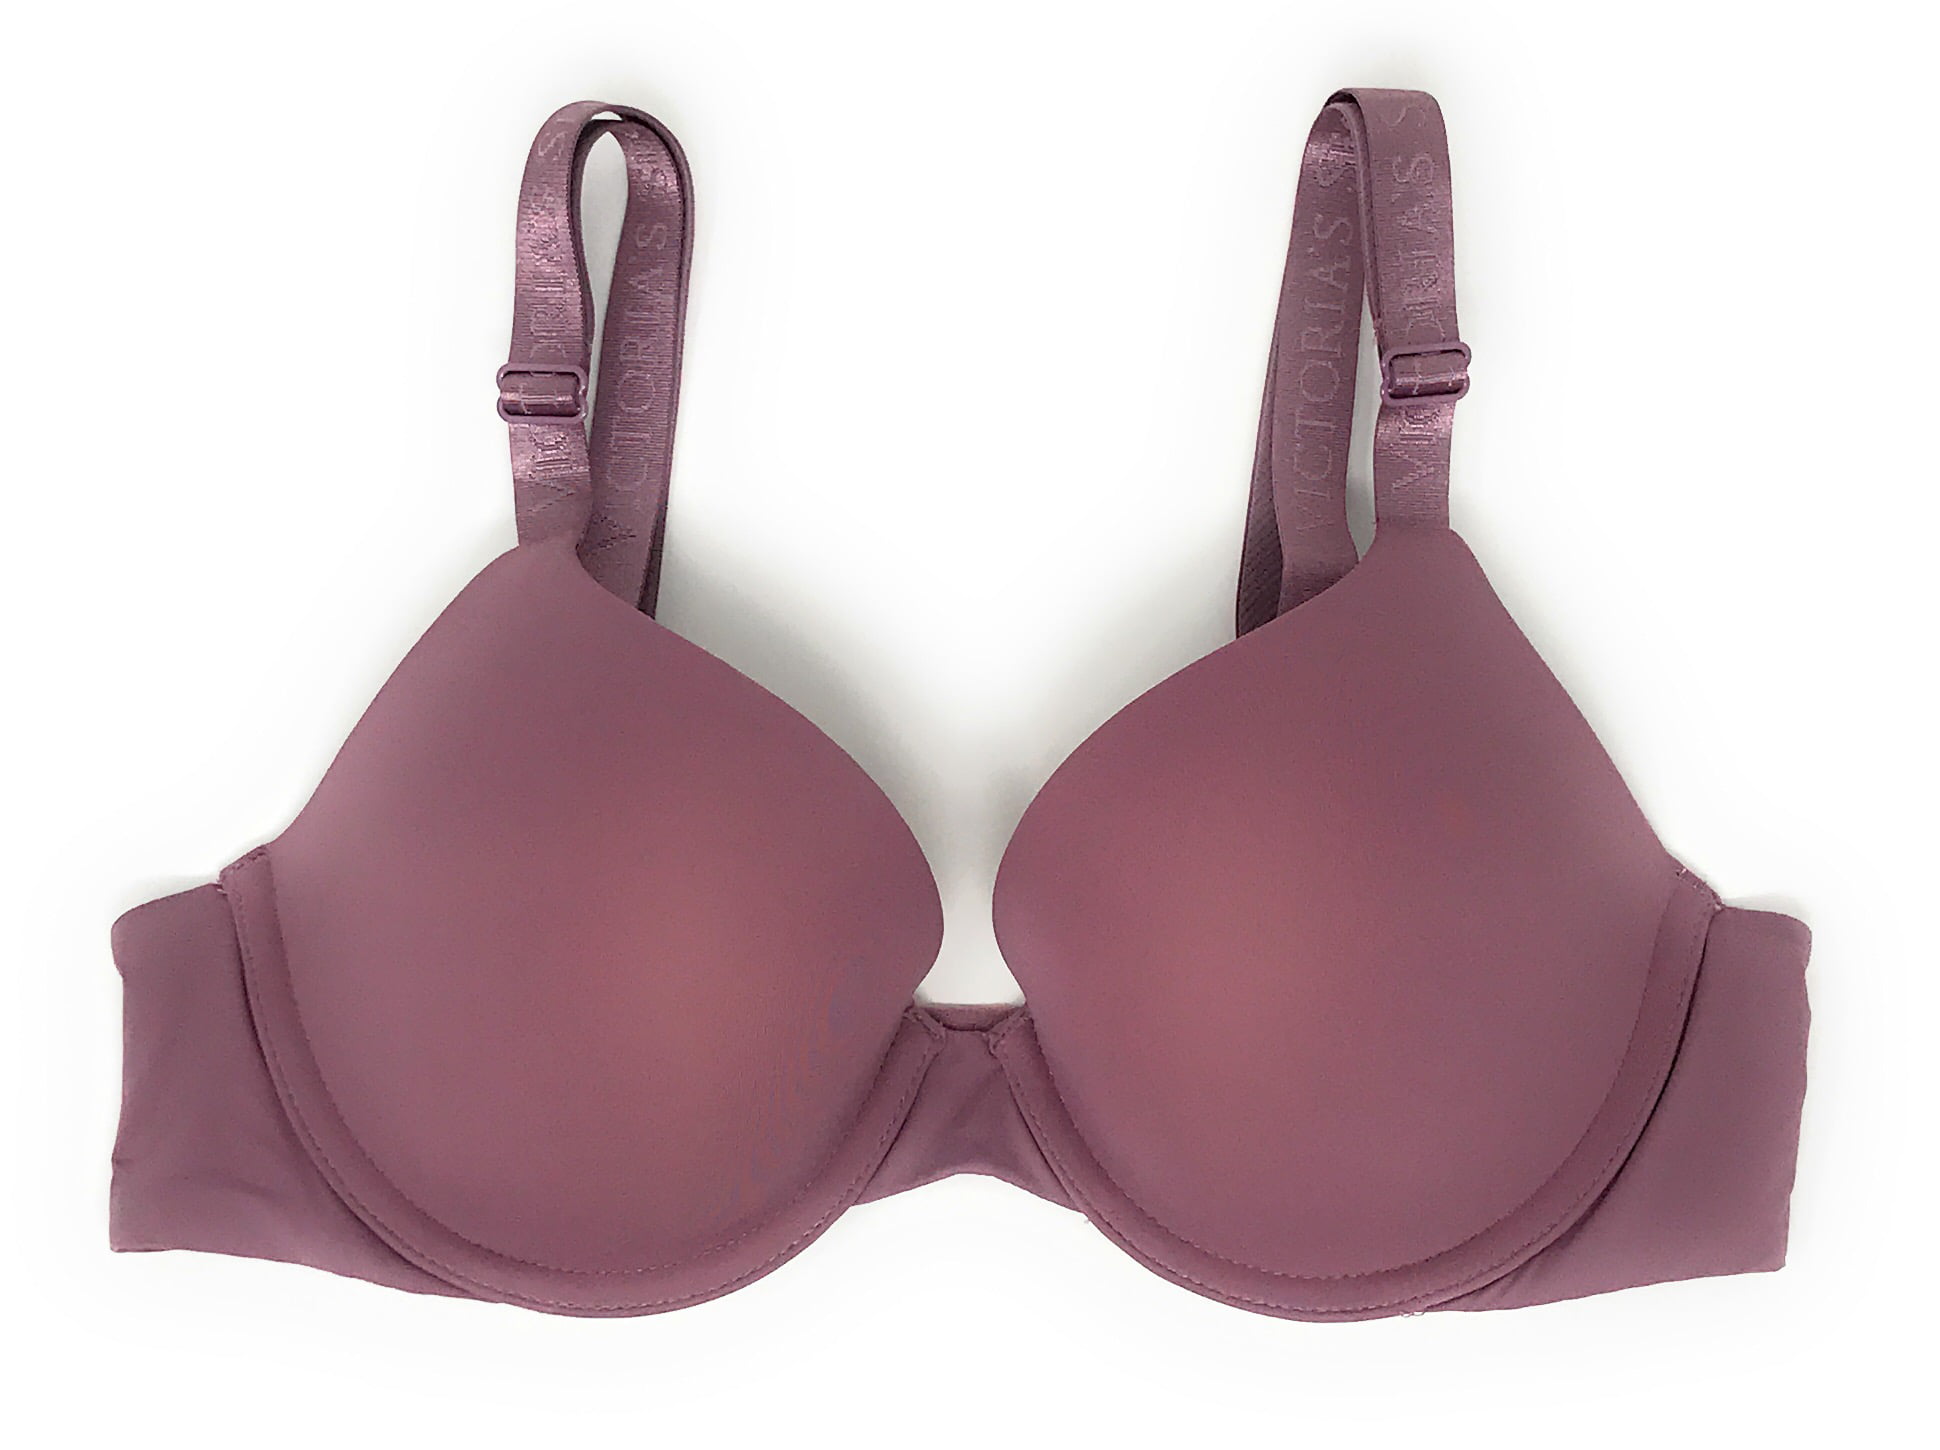 Victoria's Secret full-coverage t-shirt push-up bra, 38C, sage